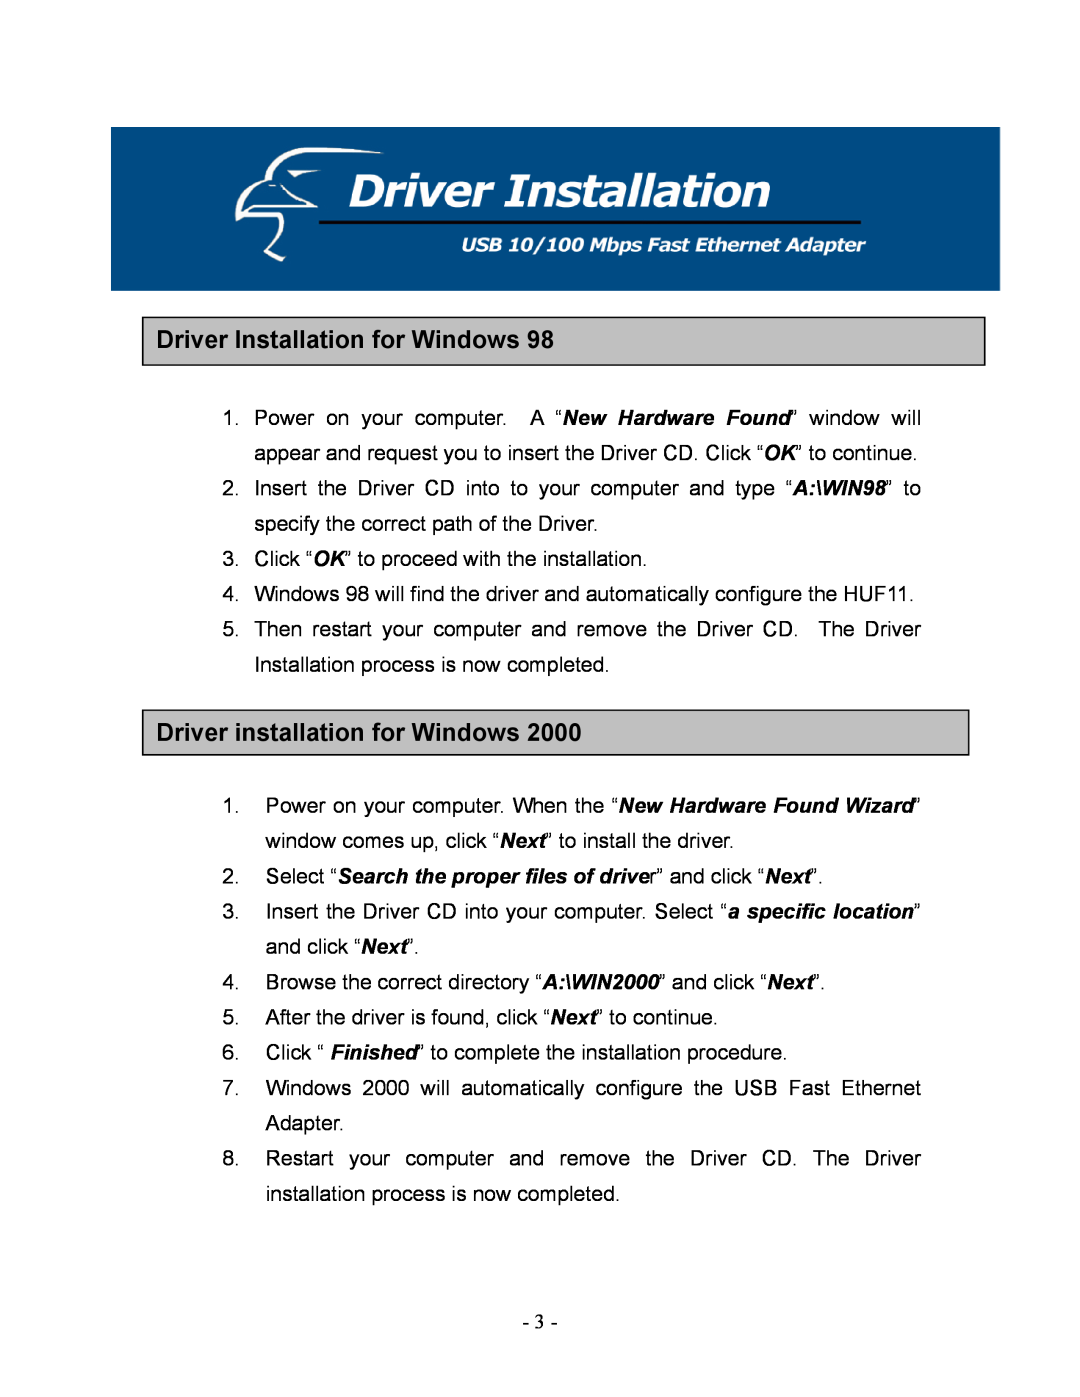 Hawking Technology USB 10/100 Mbps user manual Driver Installation for Windows, Driver installation for Windows 